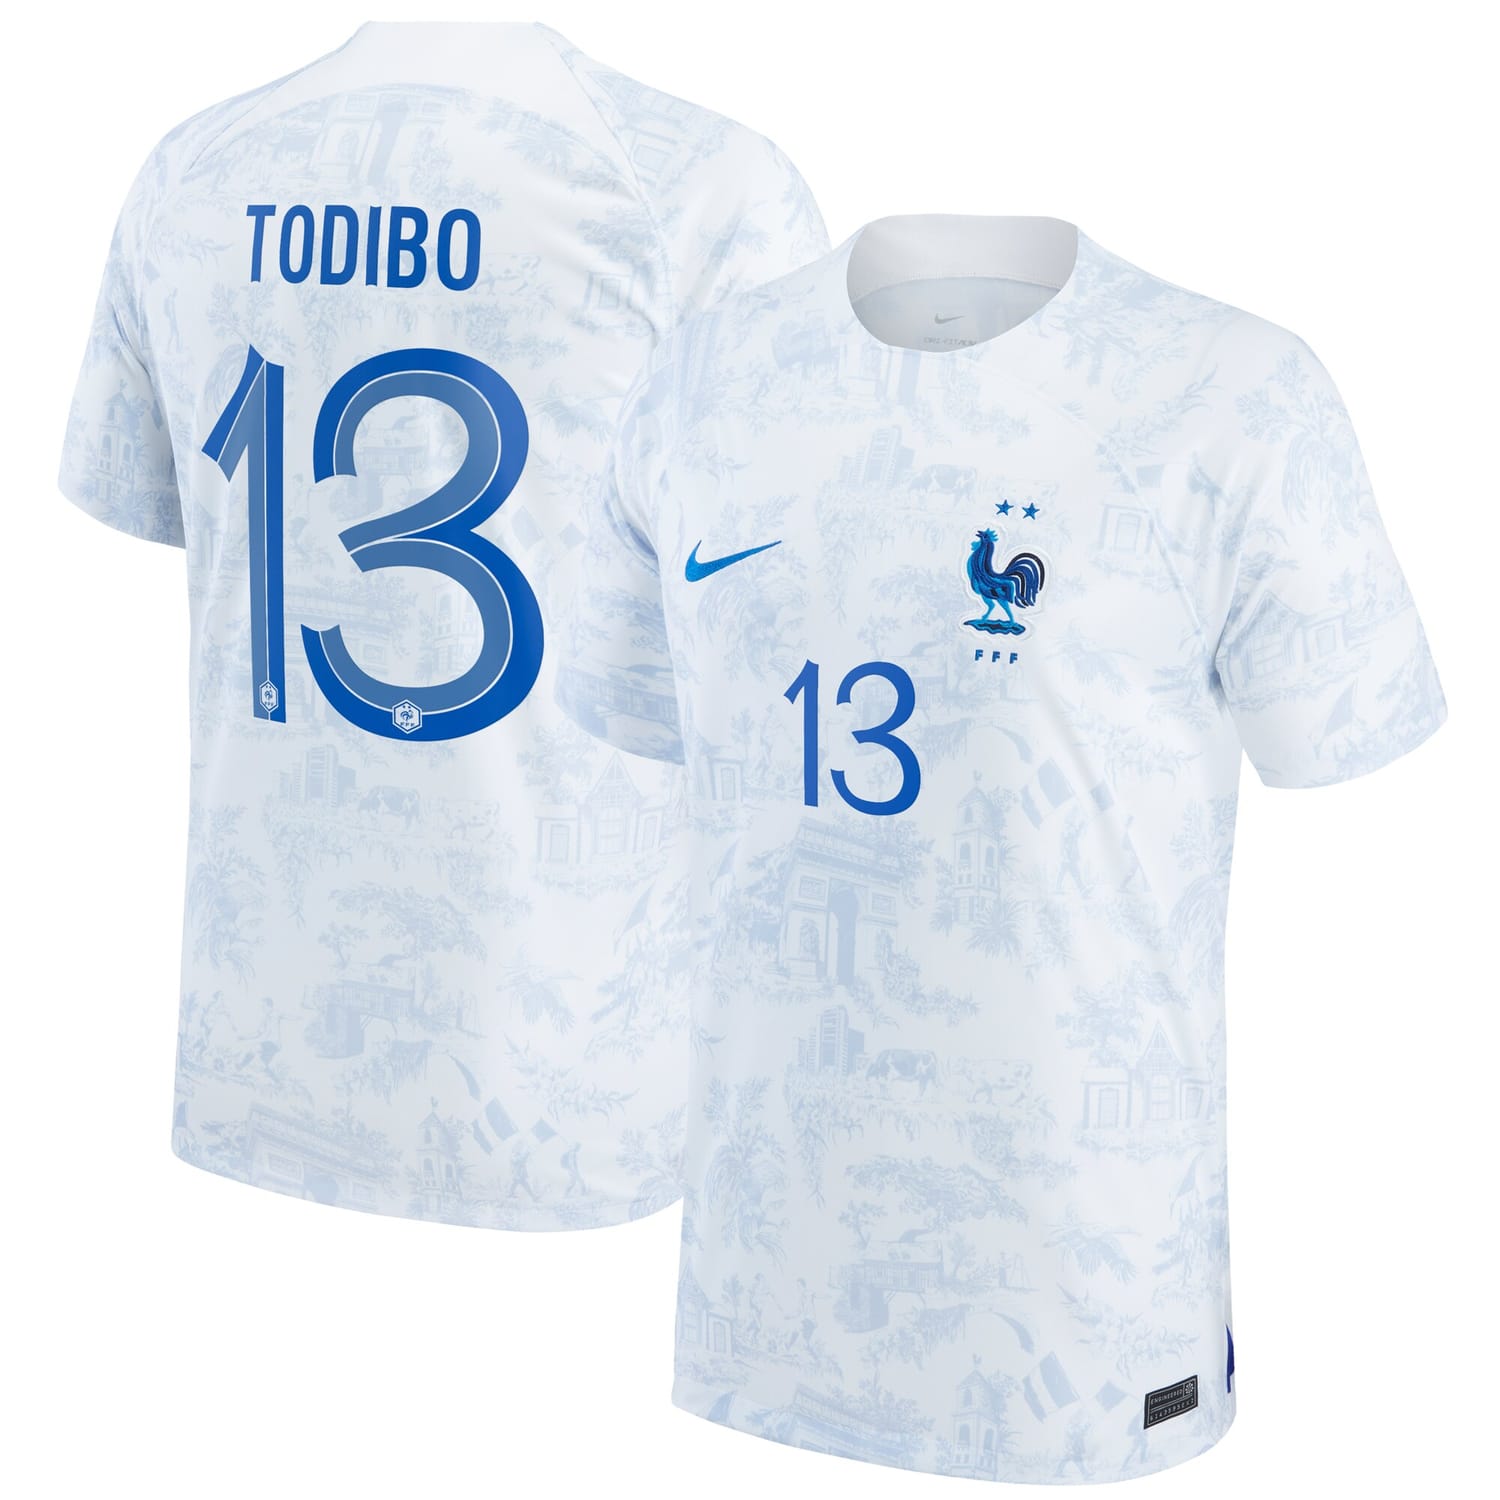 France National Team Away Jersey Shirt 2022 player Jean-Clair Todibo 13 printing for Men